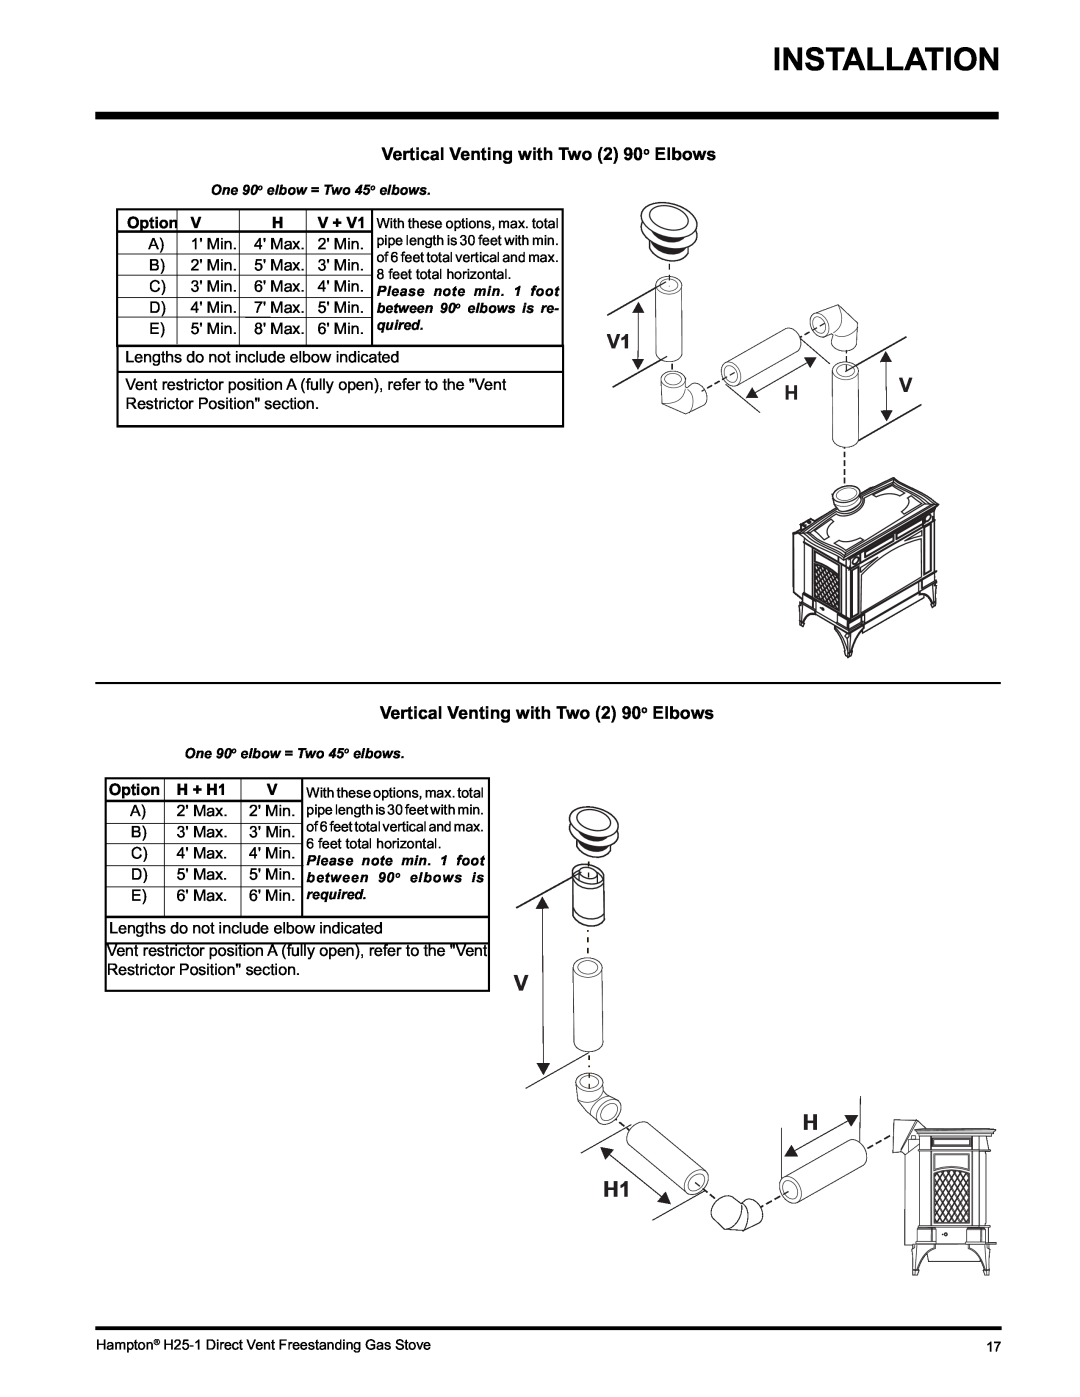 Hampton Direct H25-LP1 Propane, H25-NG1, H25-LP1 installation manual V H1 